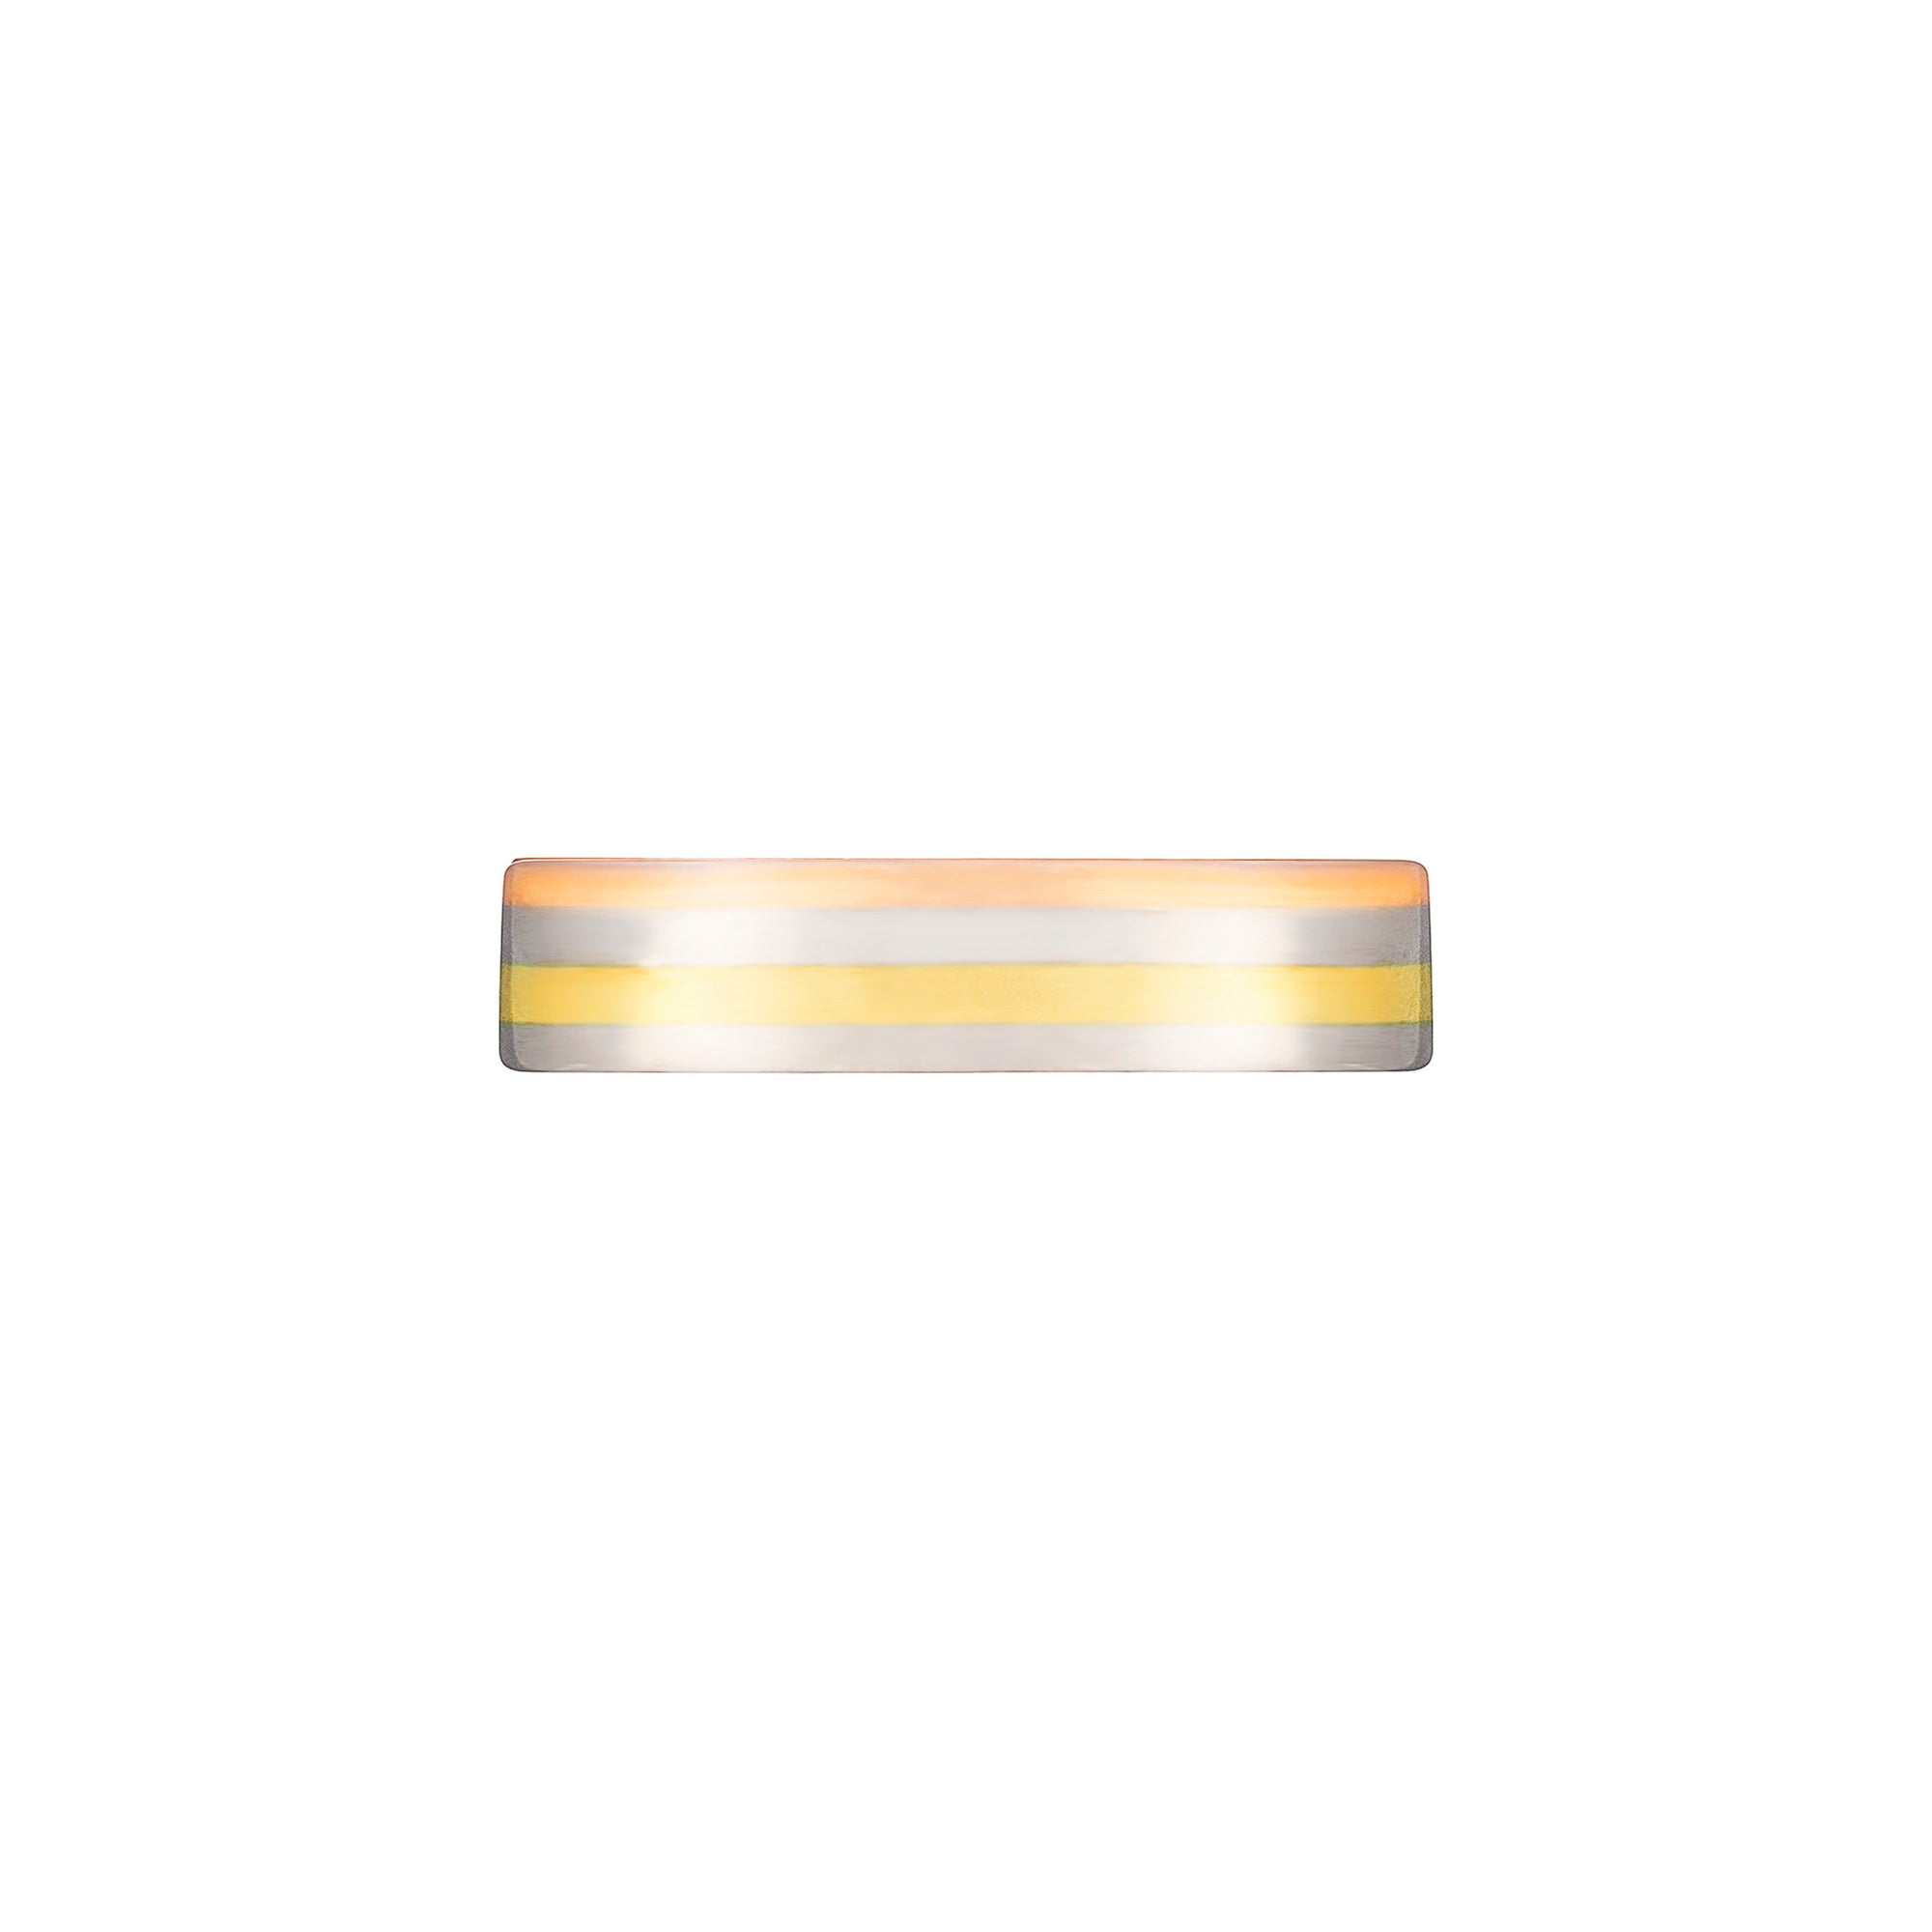 GG Quartrize - White Thin Fusion Gold Ring AU062